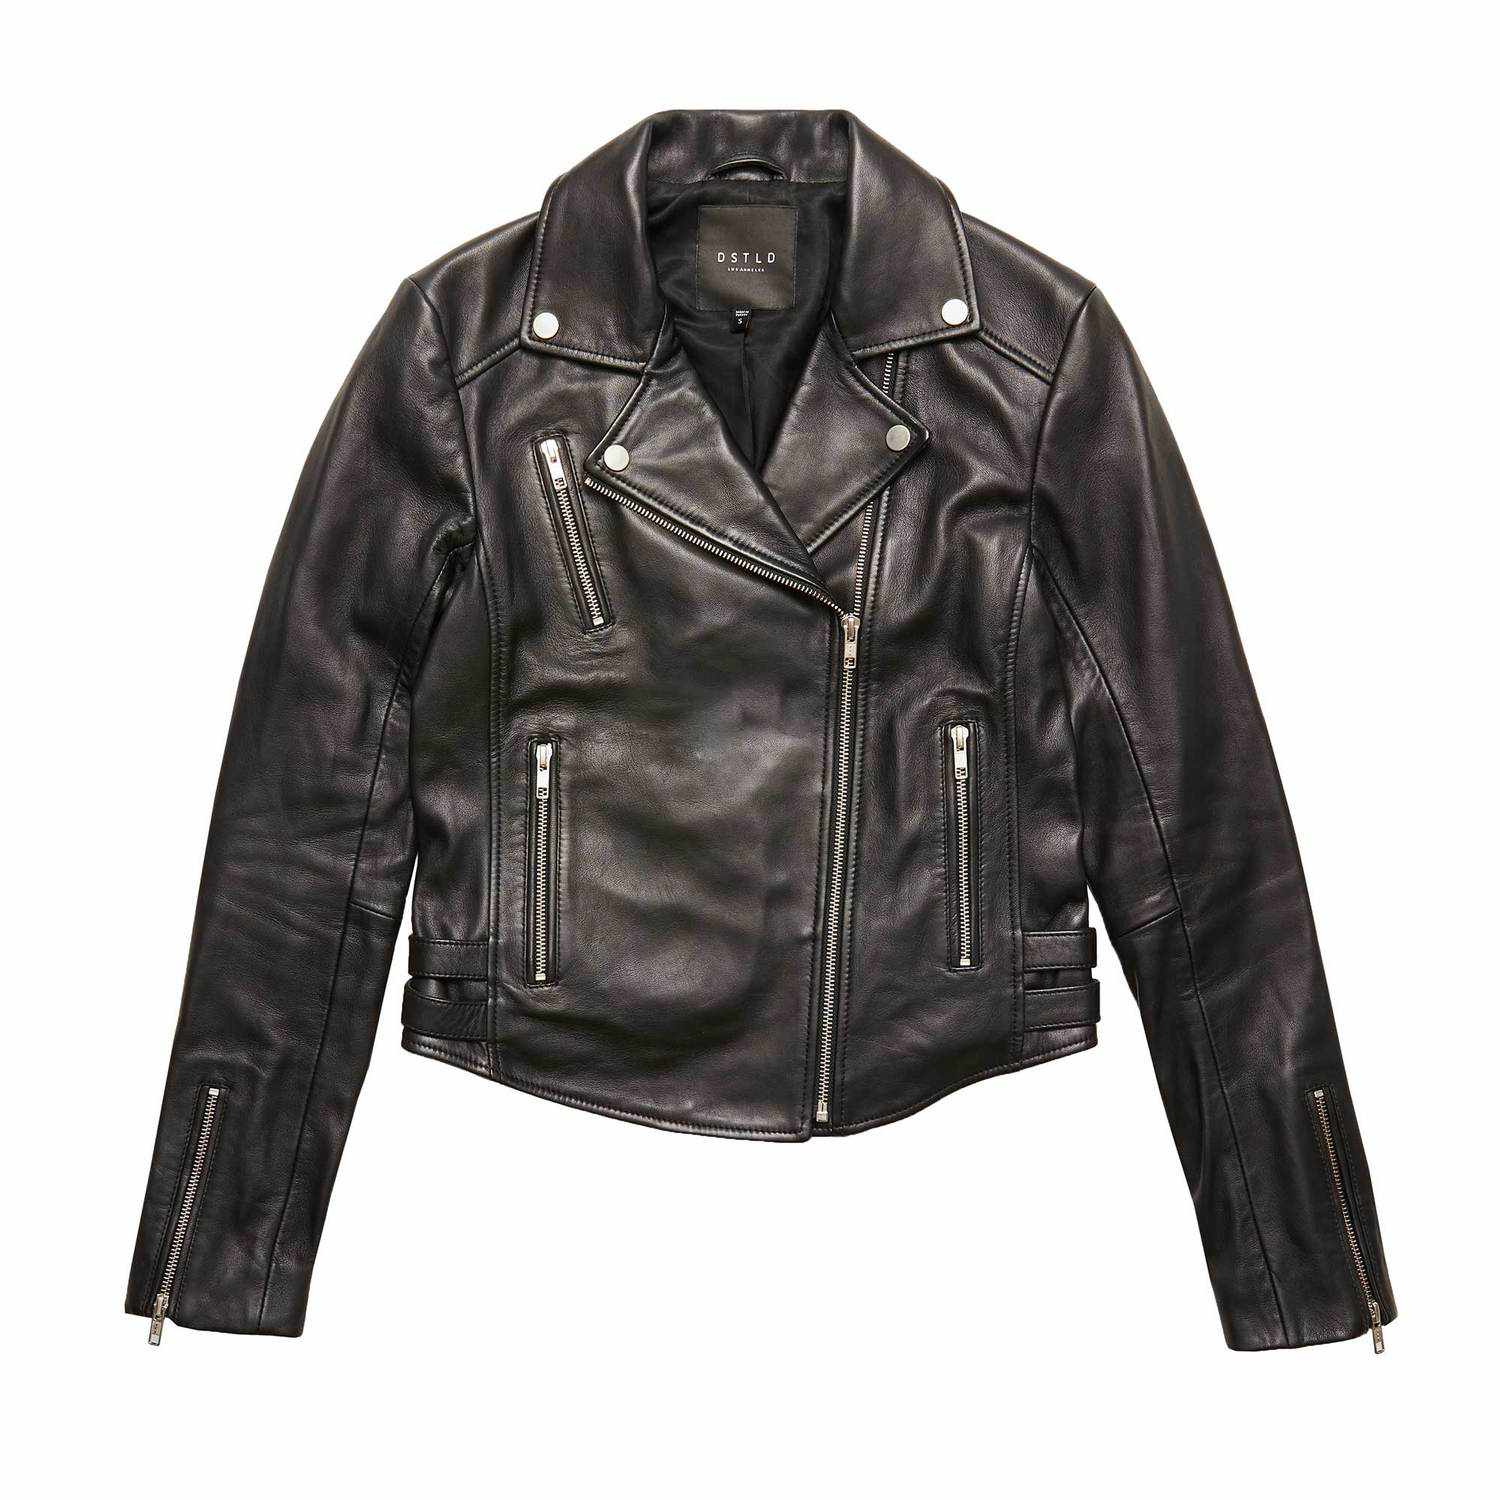 For Myself: DSTLD Leather Jacket